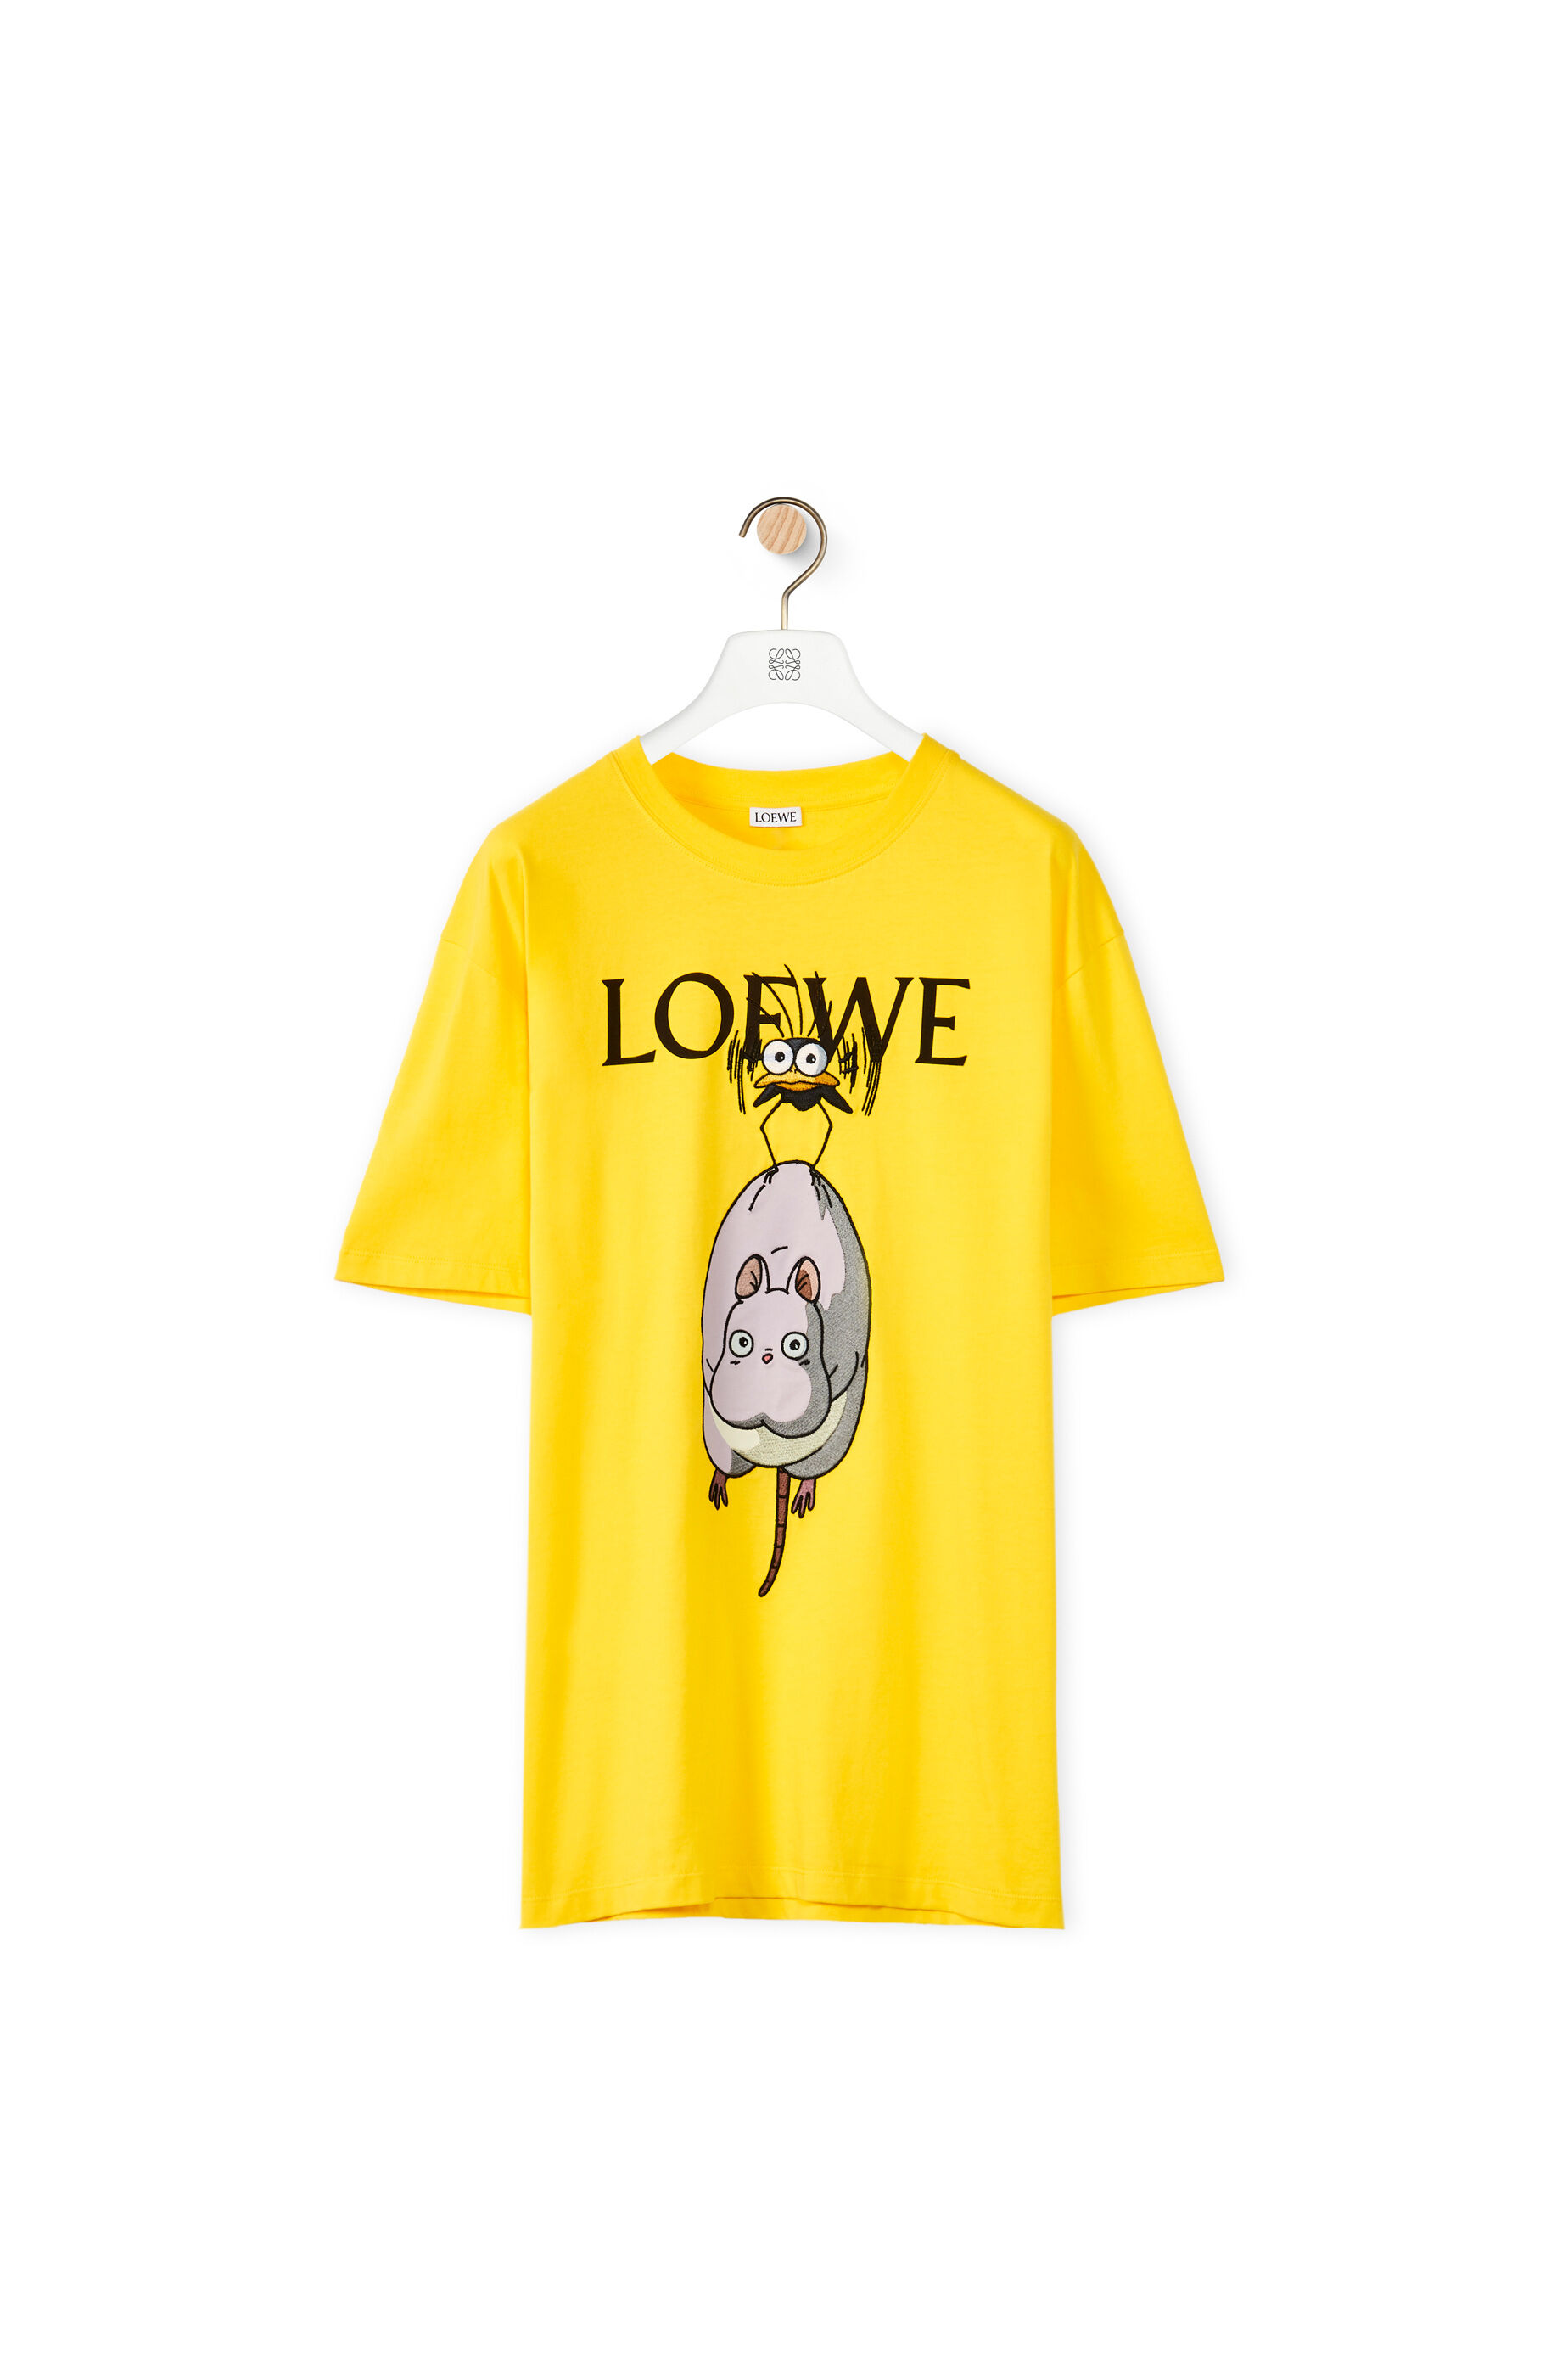 LOEWE x Spirited Away collection